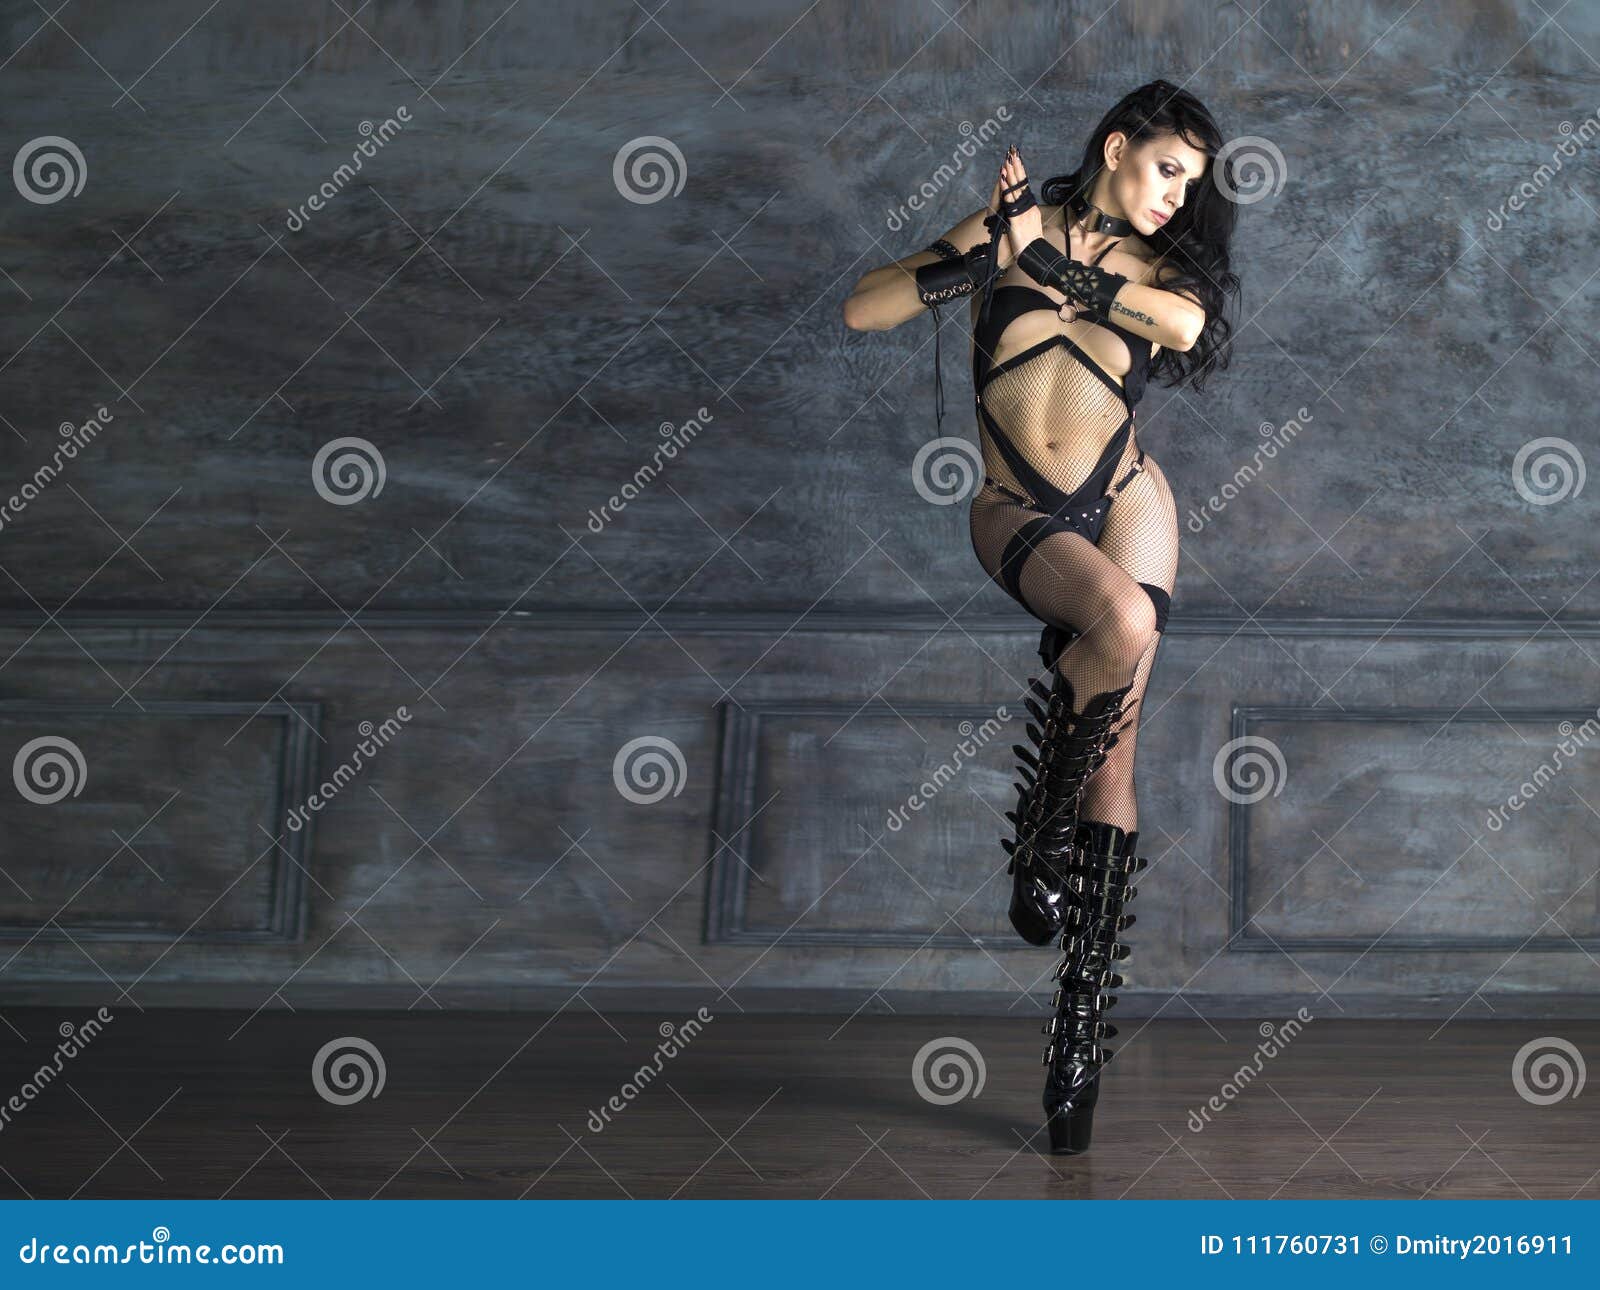 Maid. Hot Girl. Luxury. Stockings. Slender Legs. BDSM. Game Costume.  Athletic Body. Girl in Black Lingerie and Stock Image - Image of black,  flirtatious: 111760731